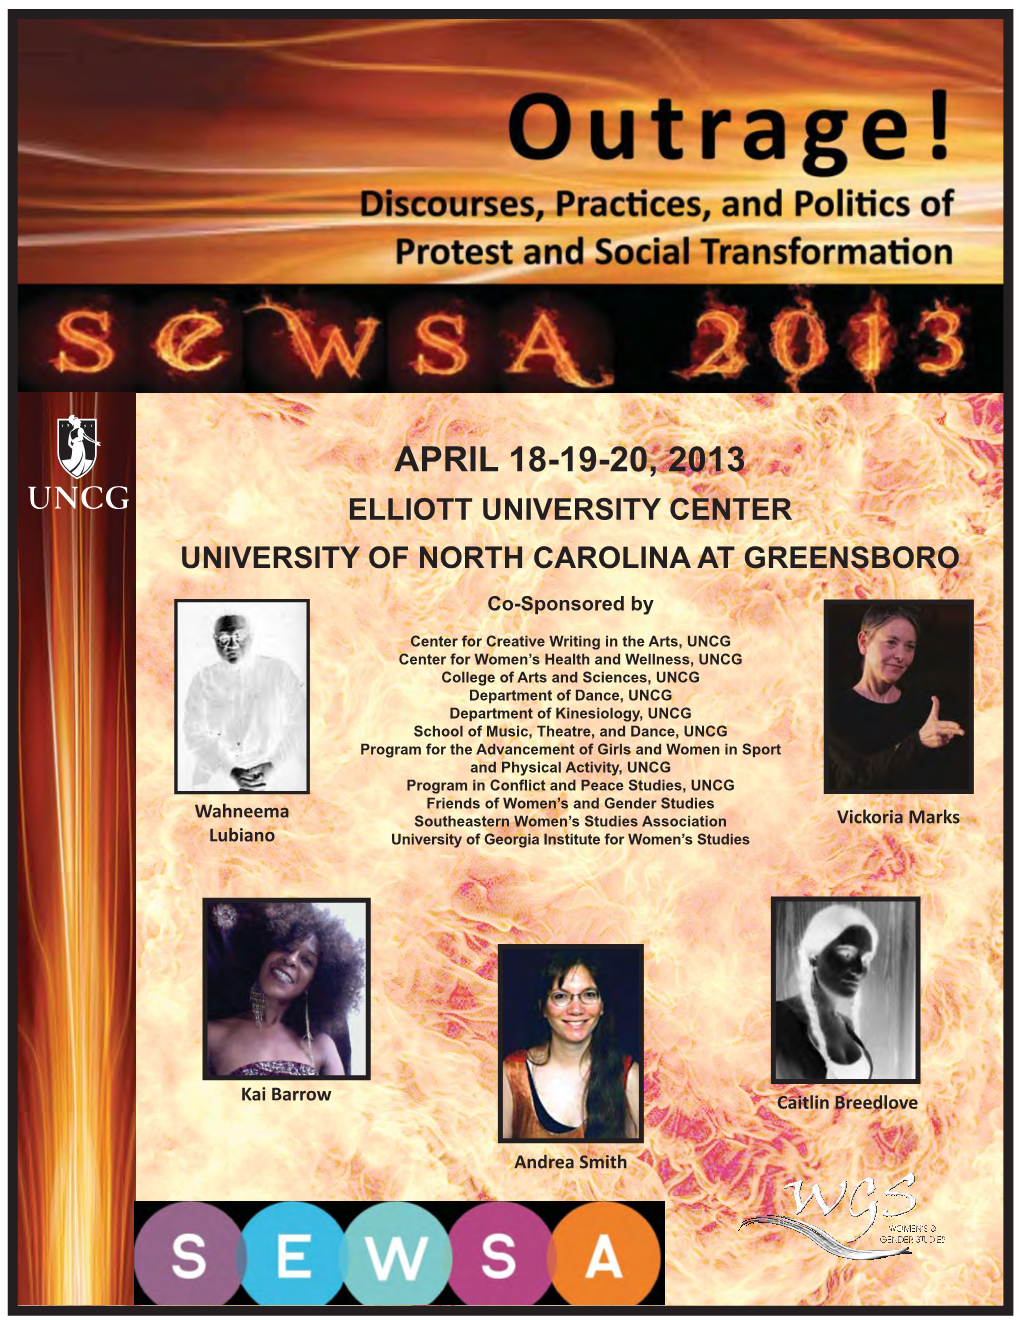 April 18-19-20, 2013 Elliott University Center University of North Carolina at Greensboro